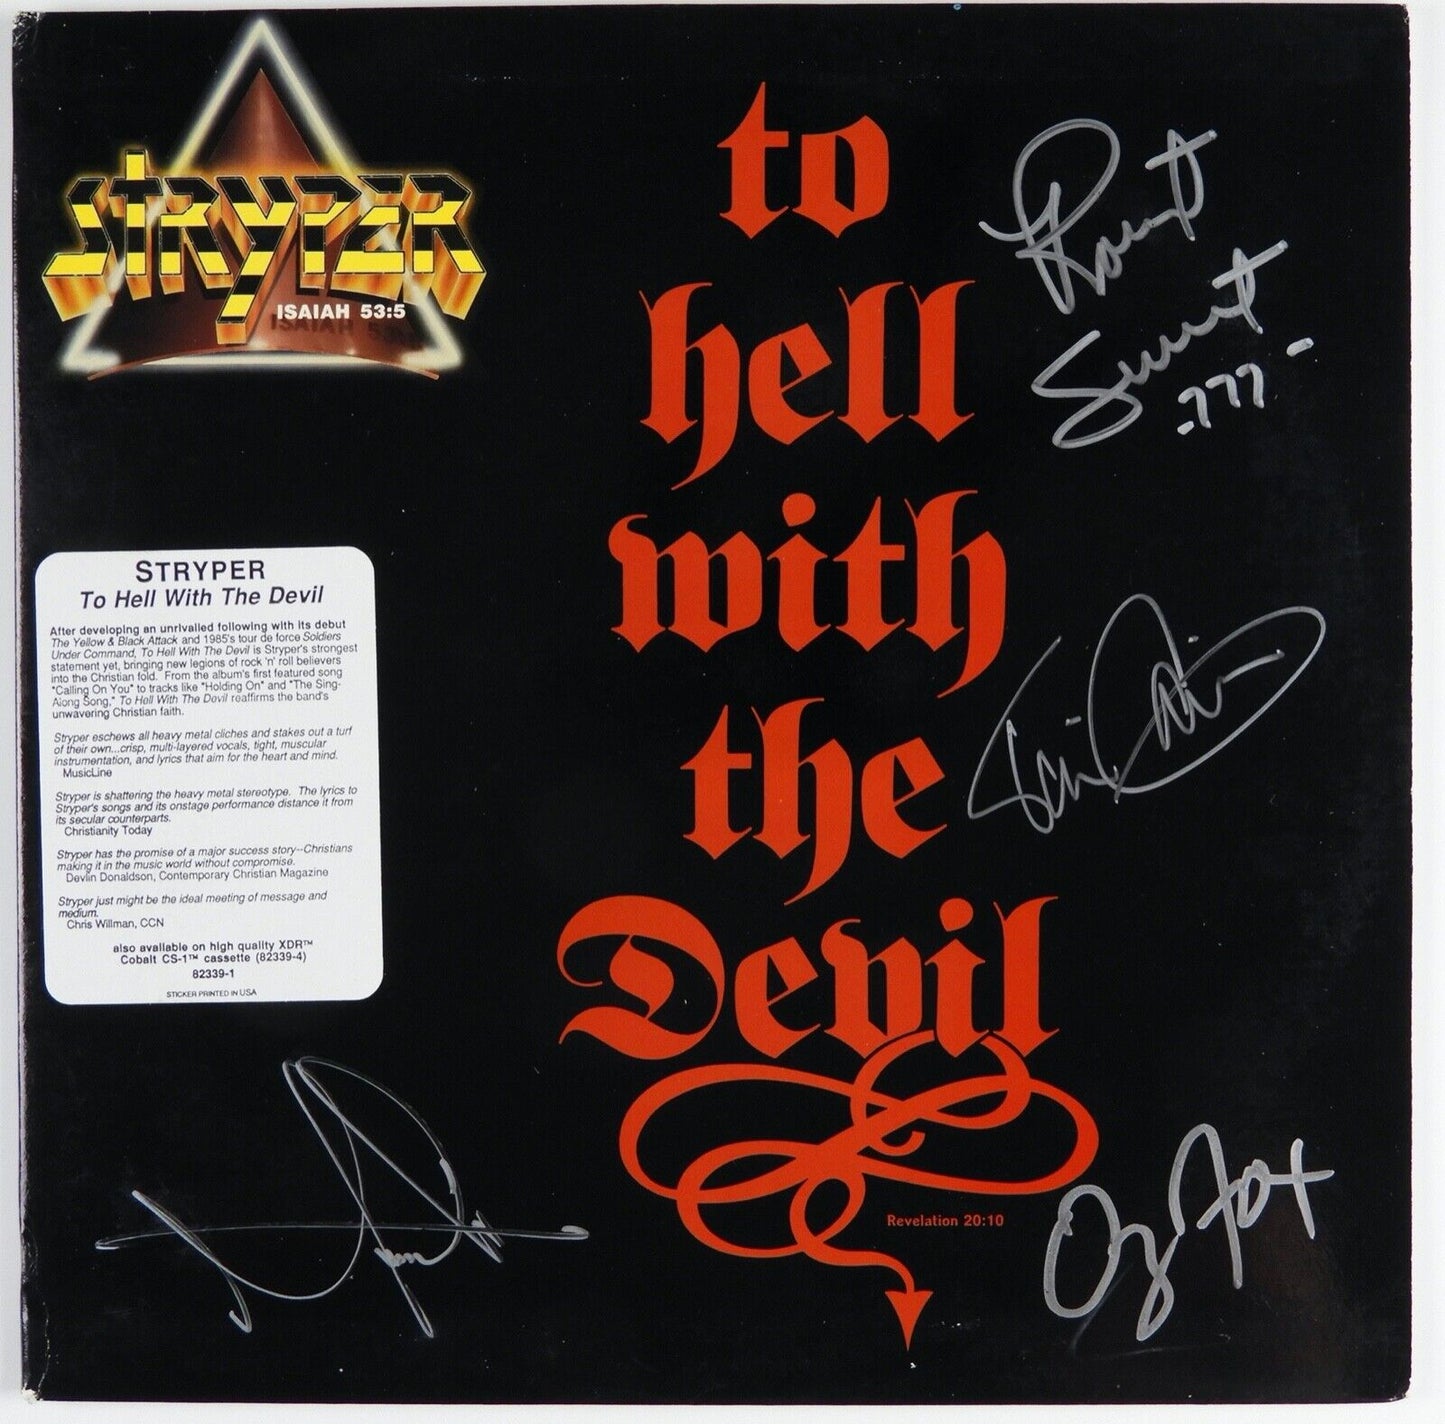 Stryper Fully Signed Autograph JSA Record Album Vinyl